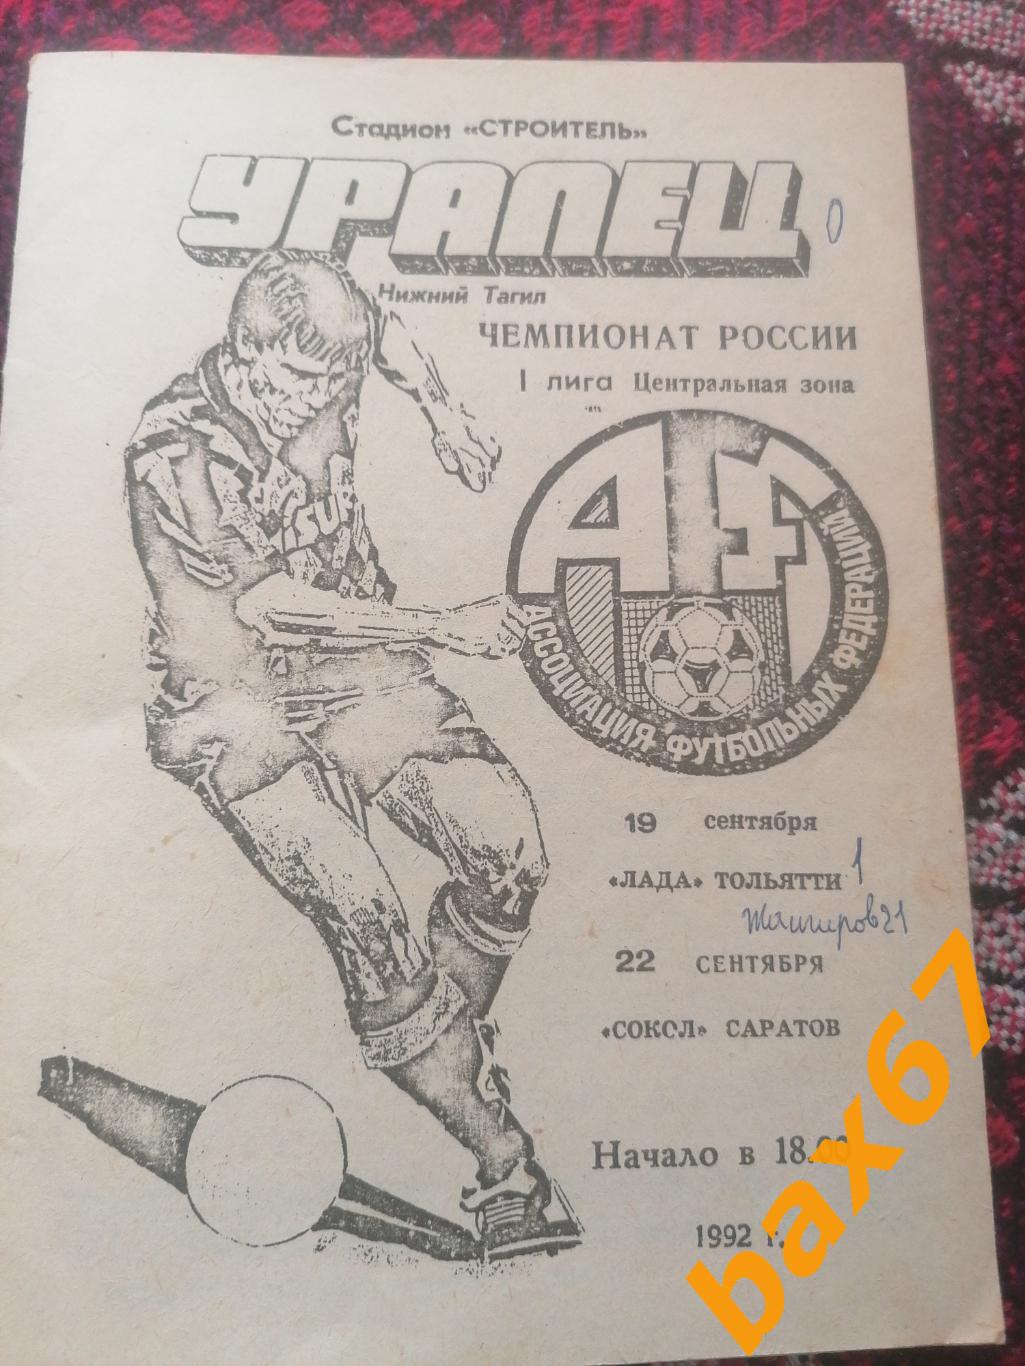 Уралец Нижний Тагил - Тольятти, Саратов 19-22.09.1992